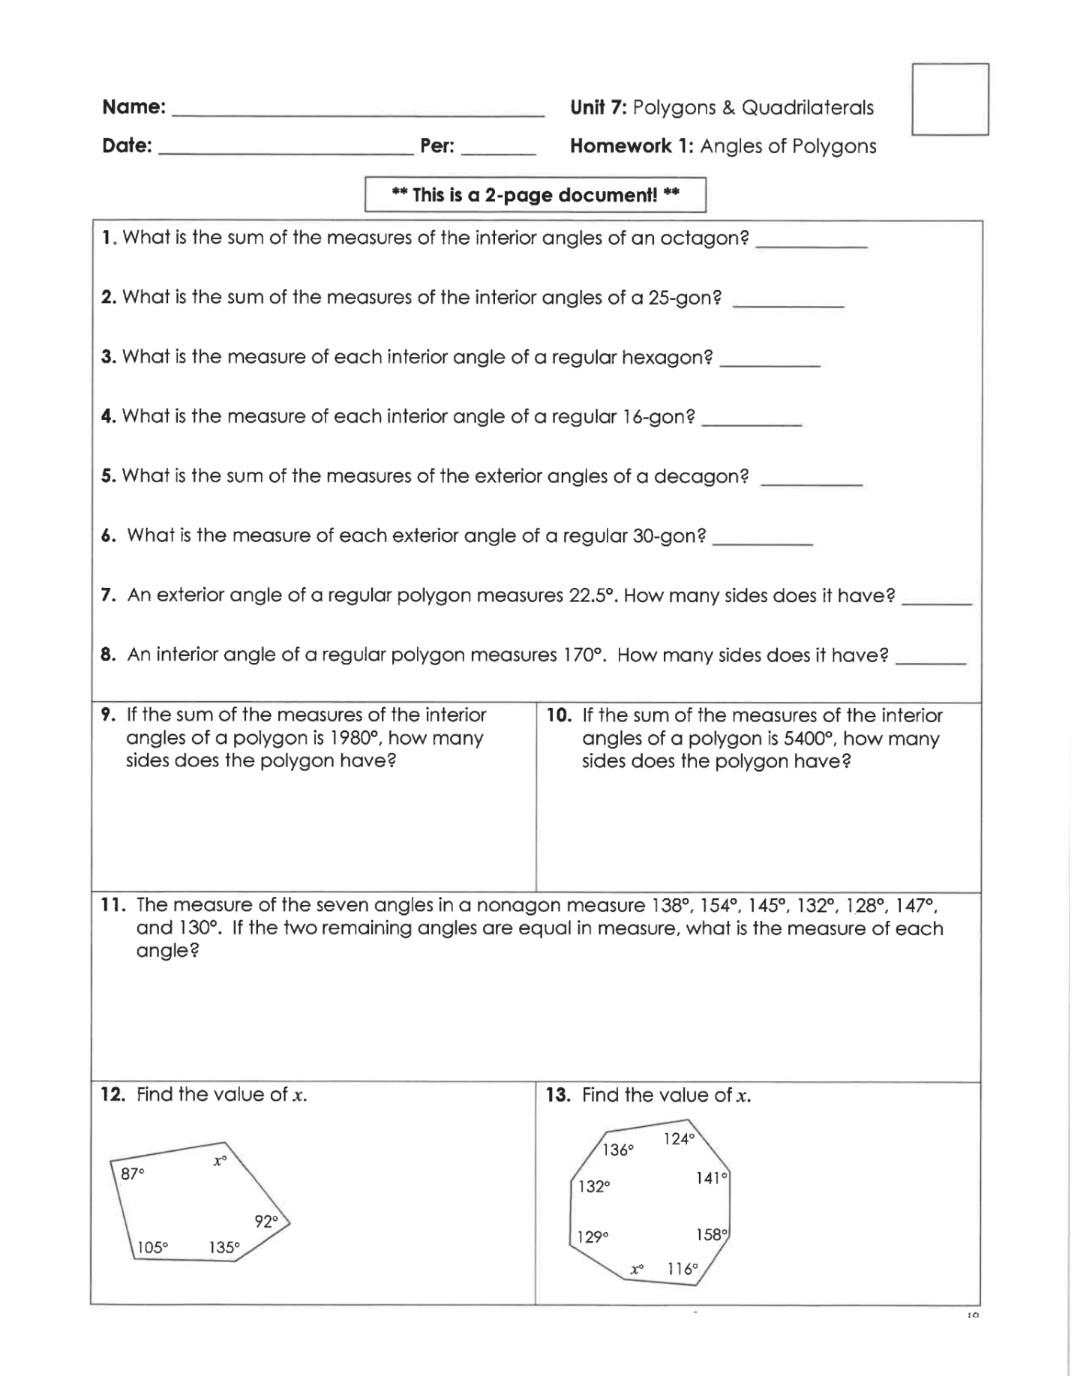 geometry unit 7 homework 4 answer key